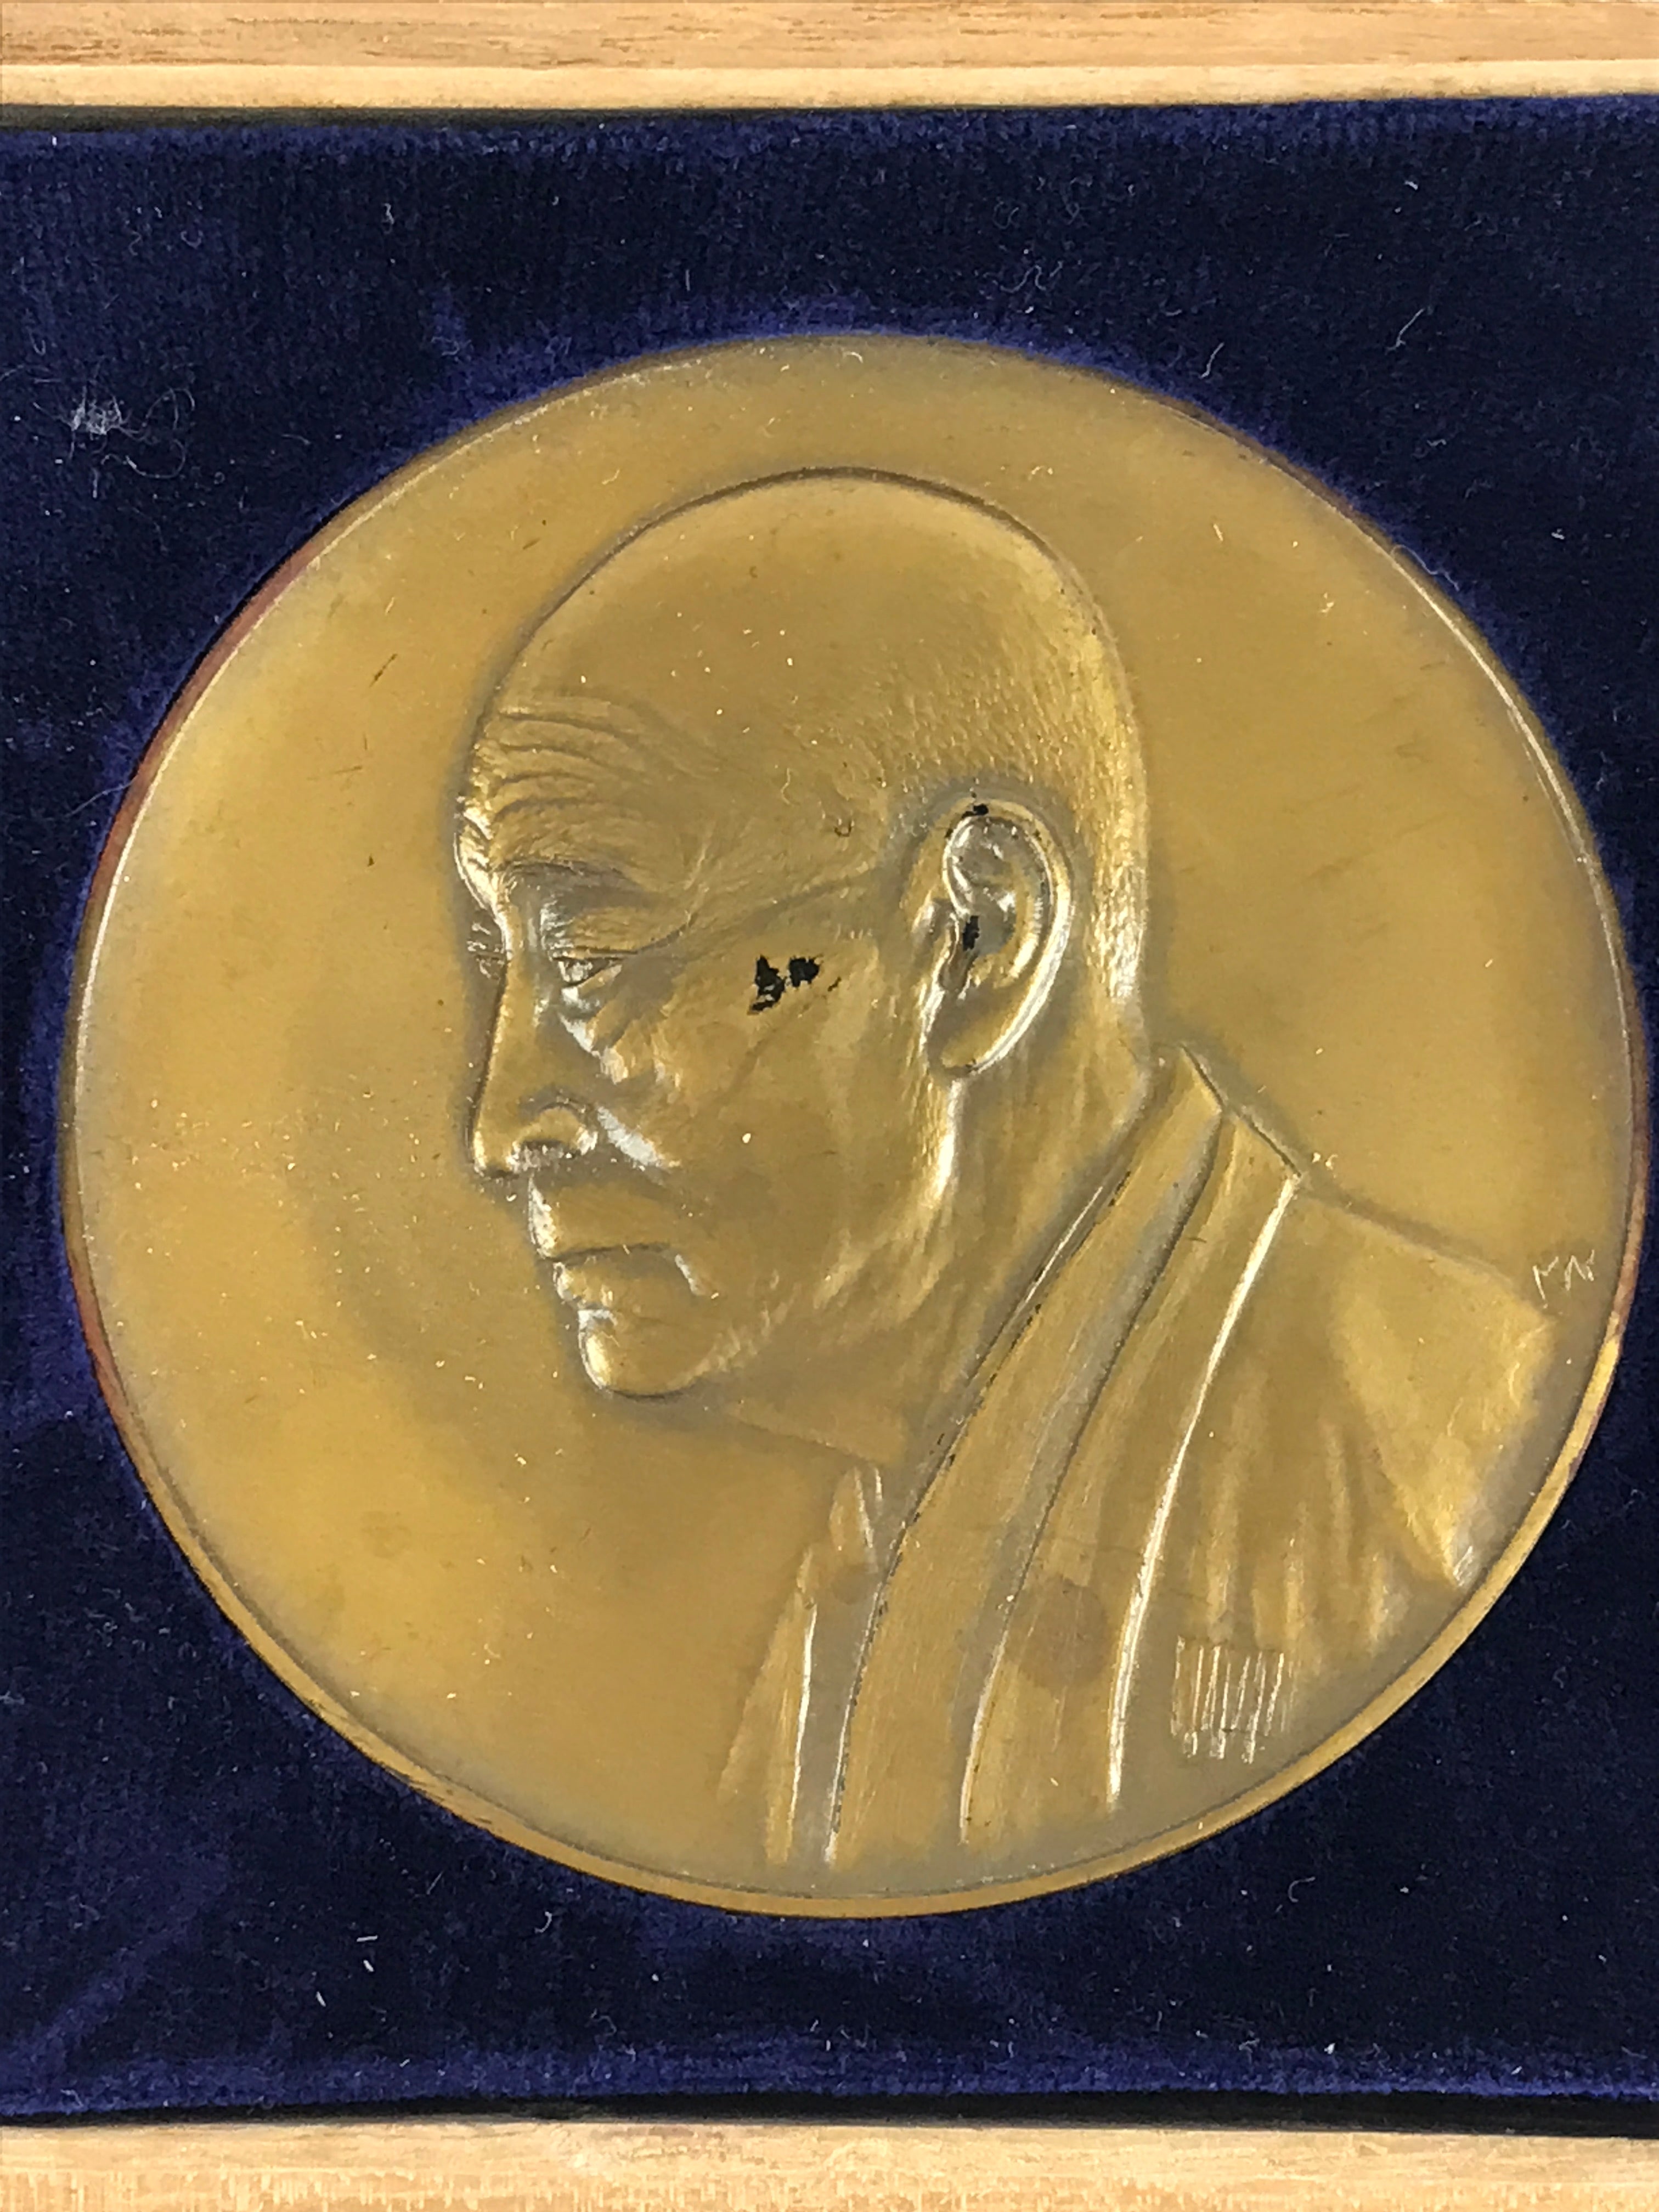 Japanese Commemorative Medal Vtg Kosaburo Yoshizumi IV Nagauta Singer JK506